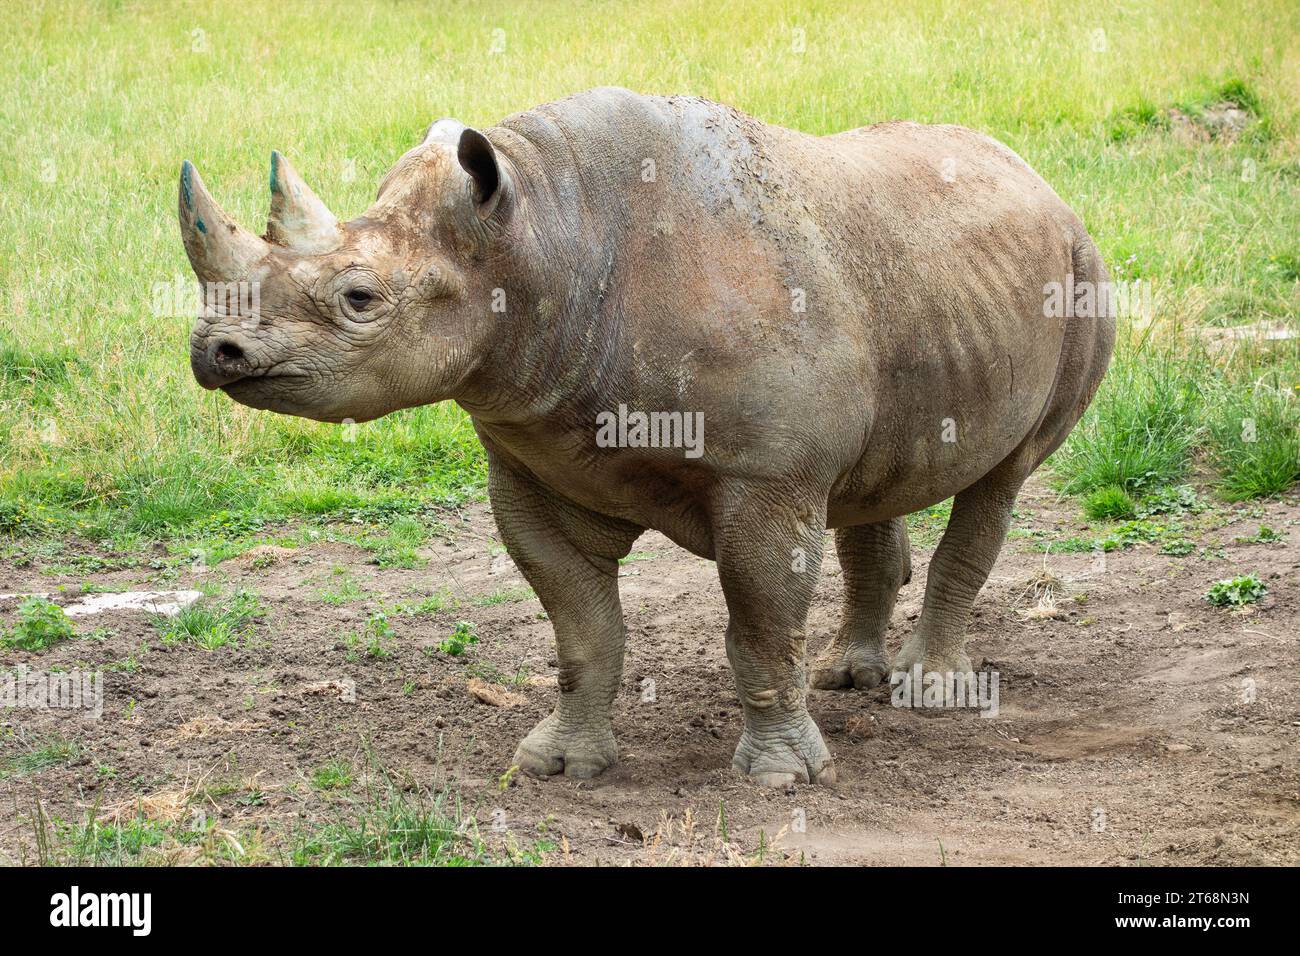 Rhinoceros standing alert taken at Port Lympne Safari Park Stock Photo